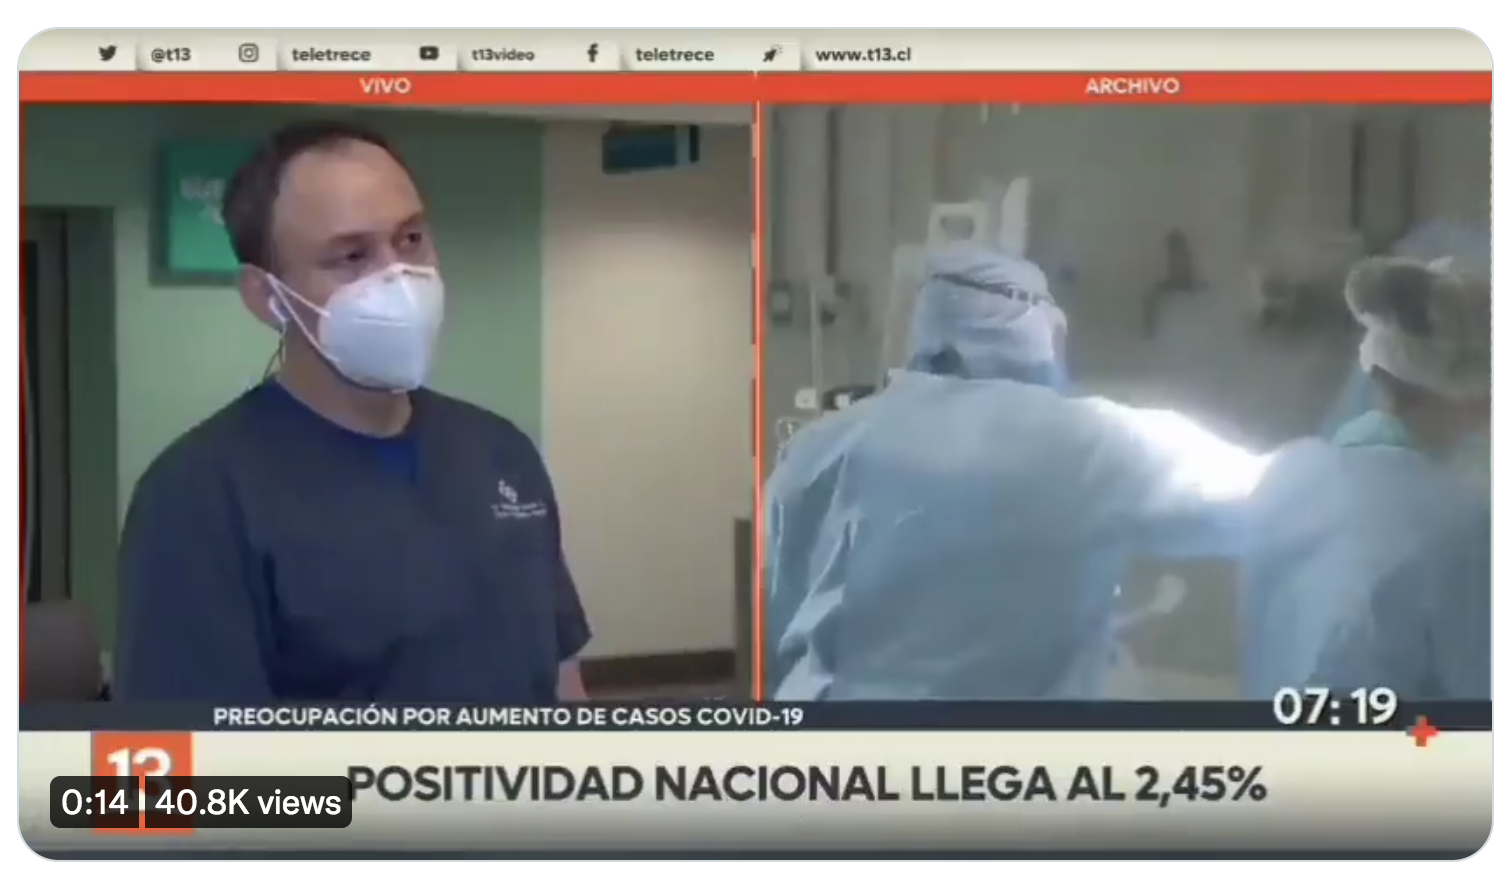 Covid : Un médecin espagnol explique que les hospitalisés sont tous vaccinés (VIDÉO)